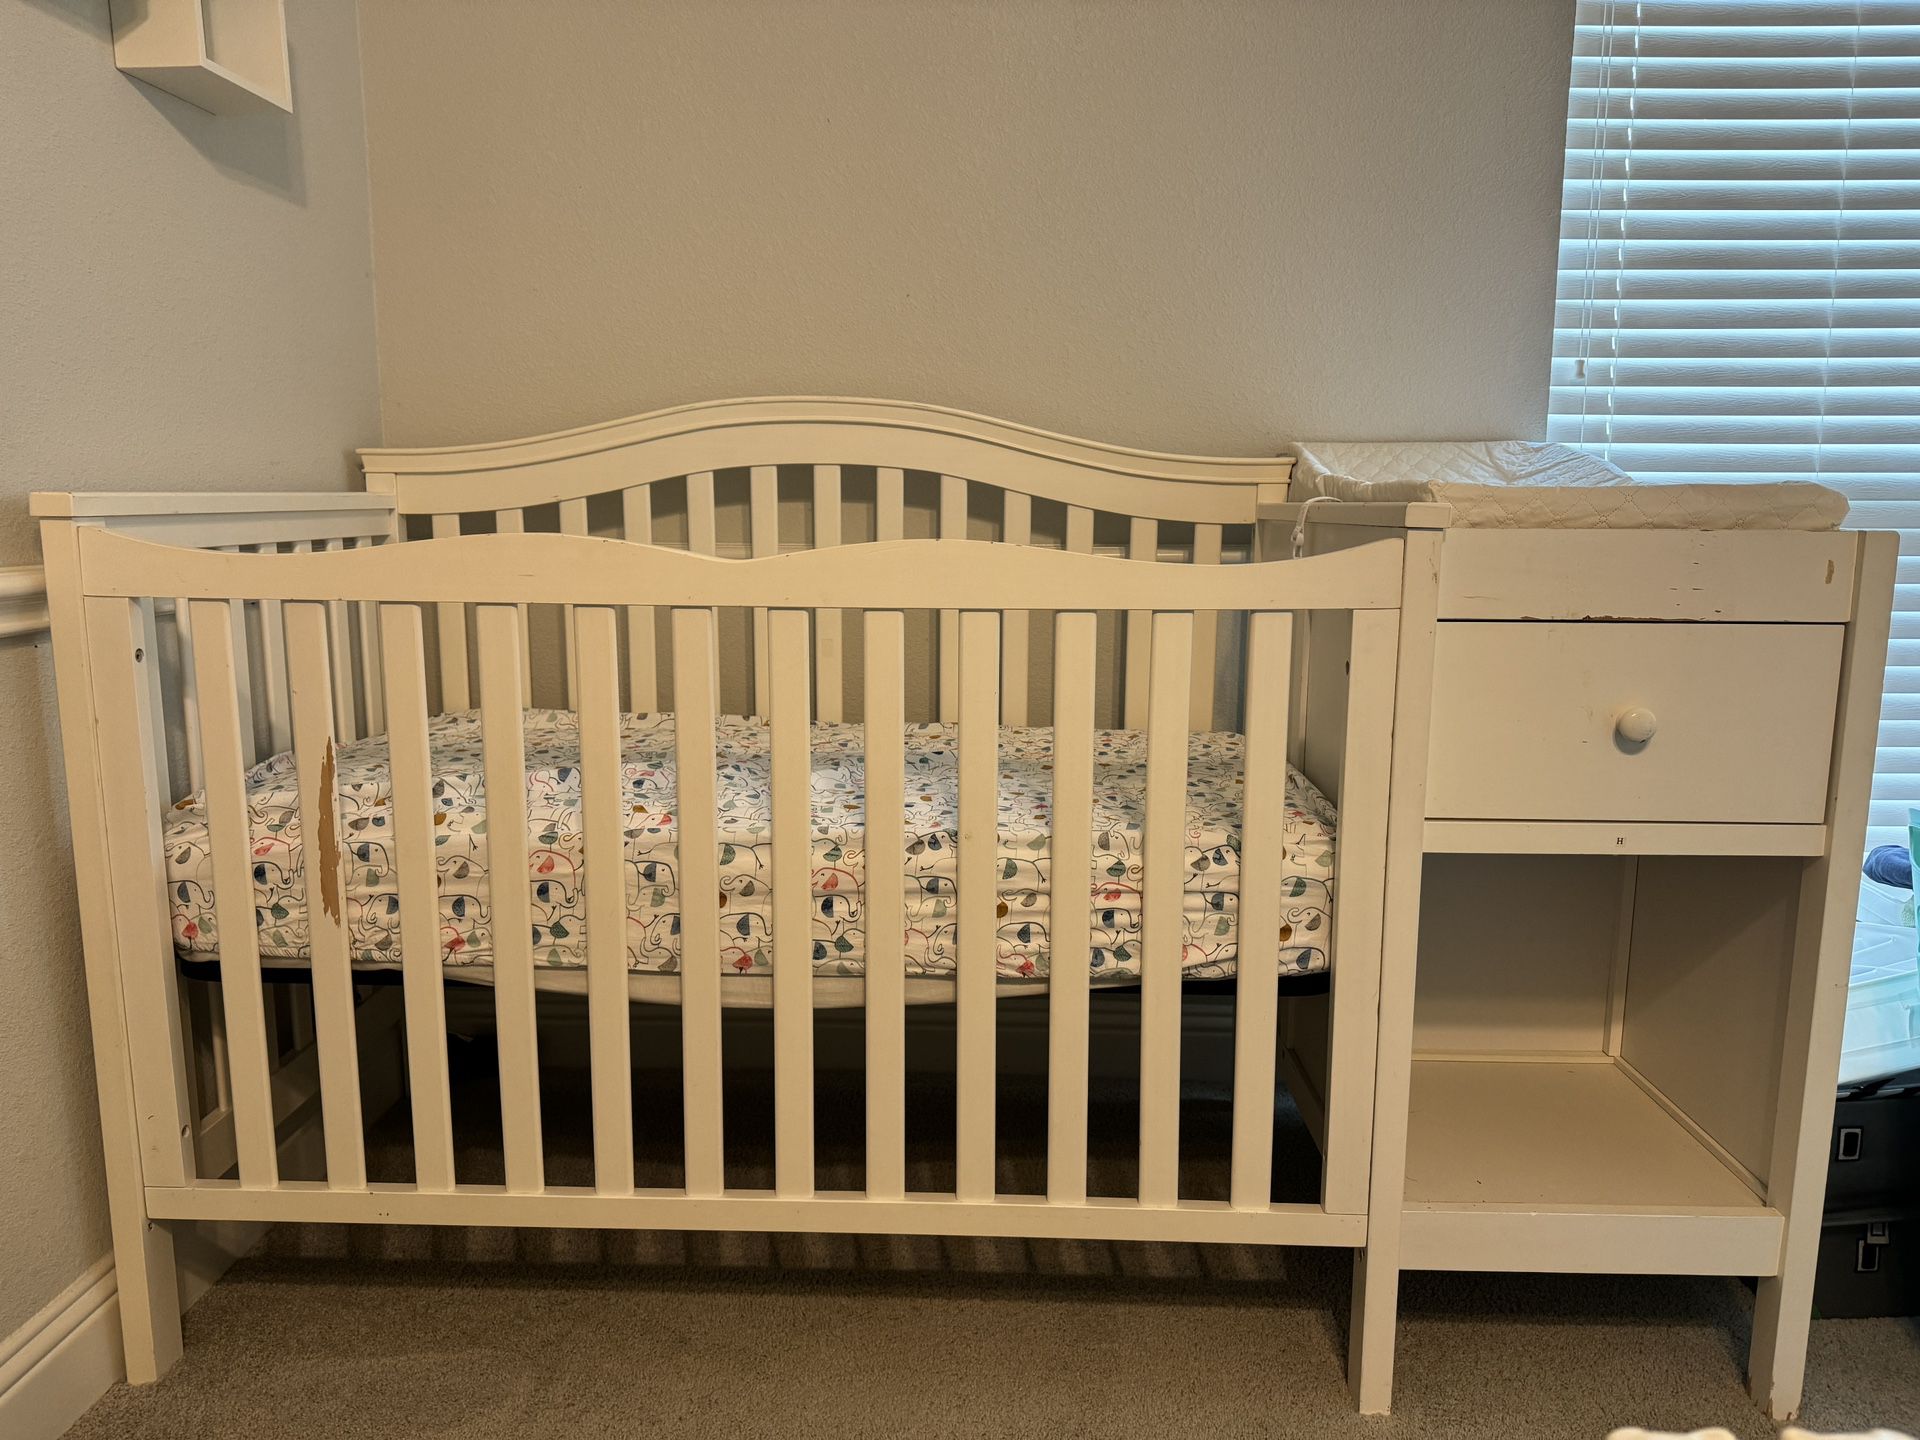 baby crib with mattress